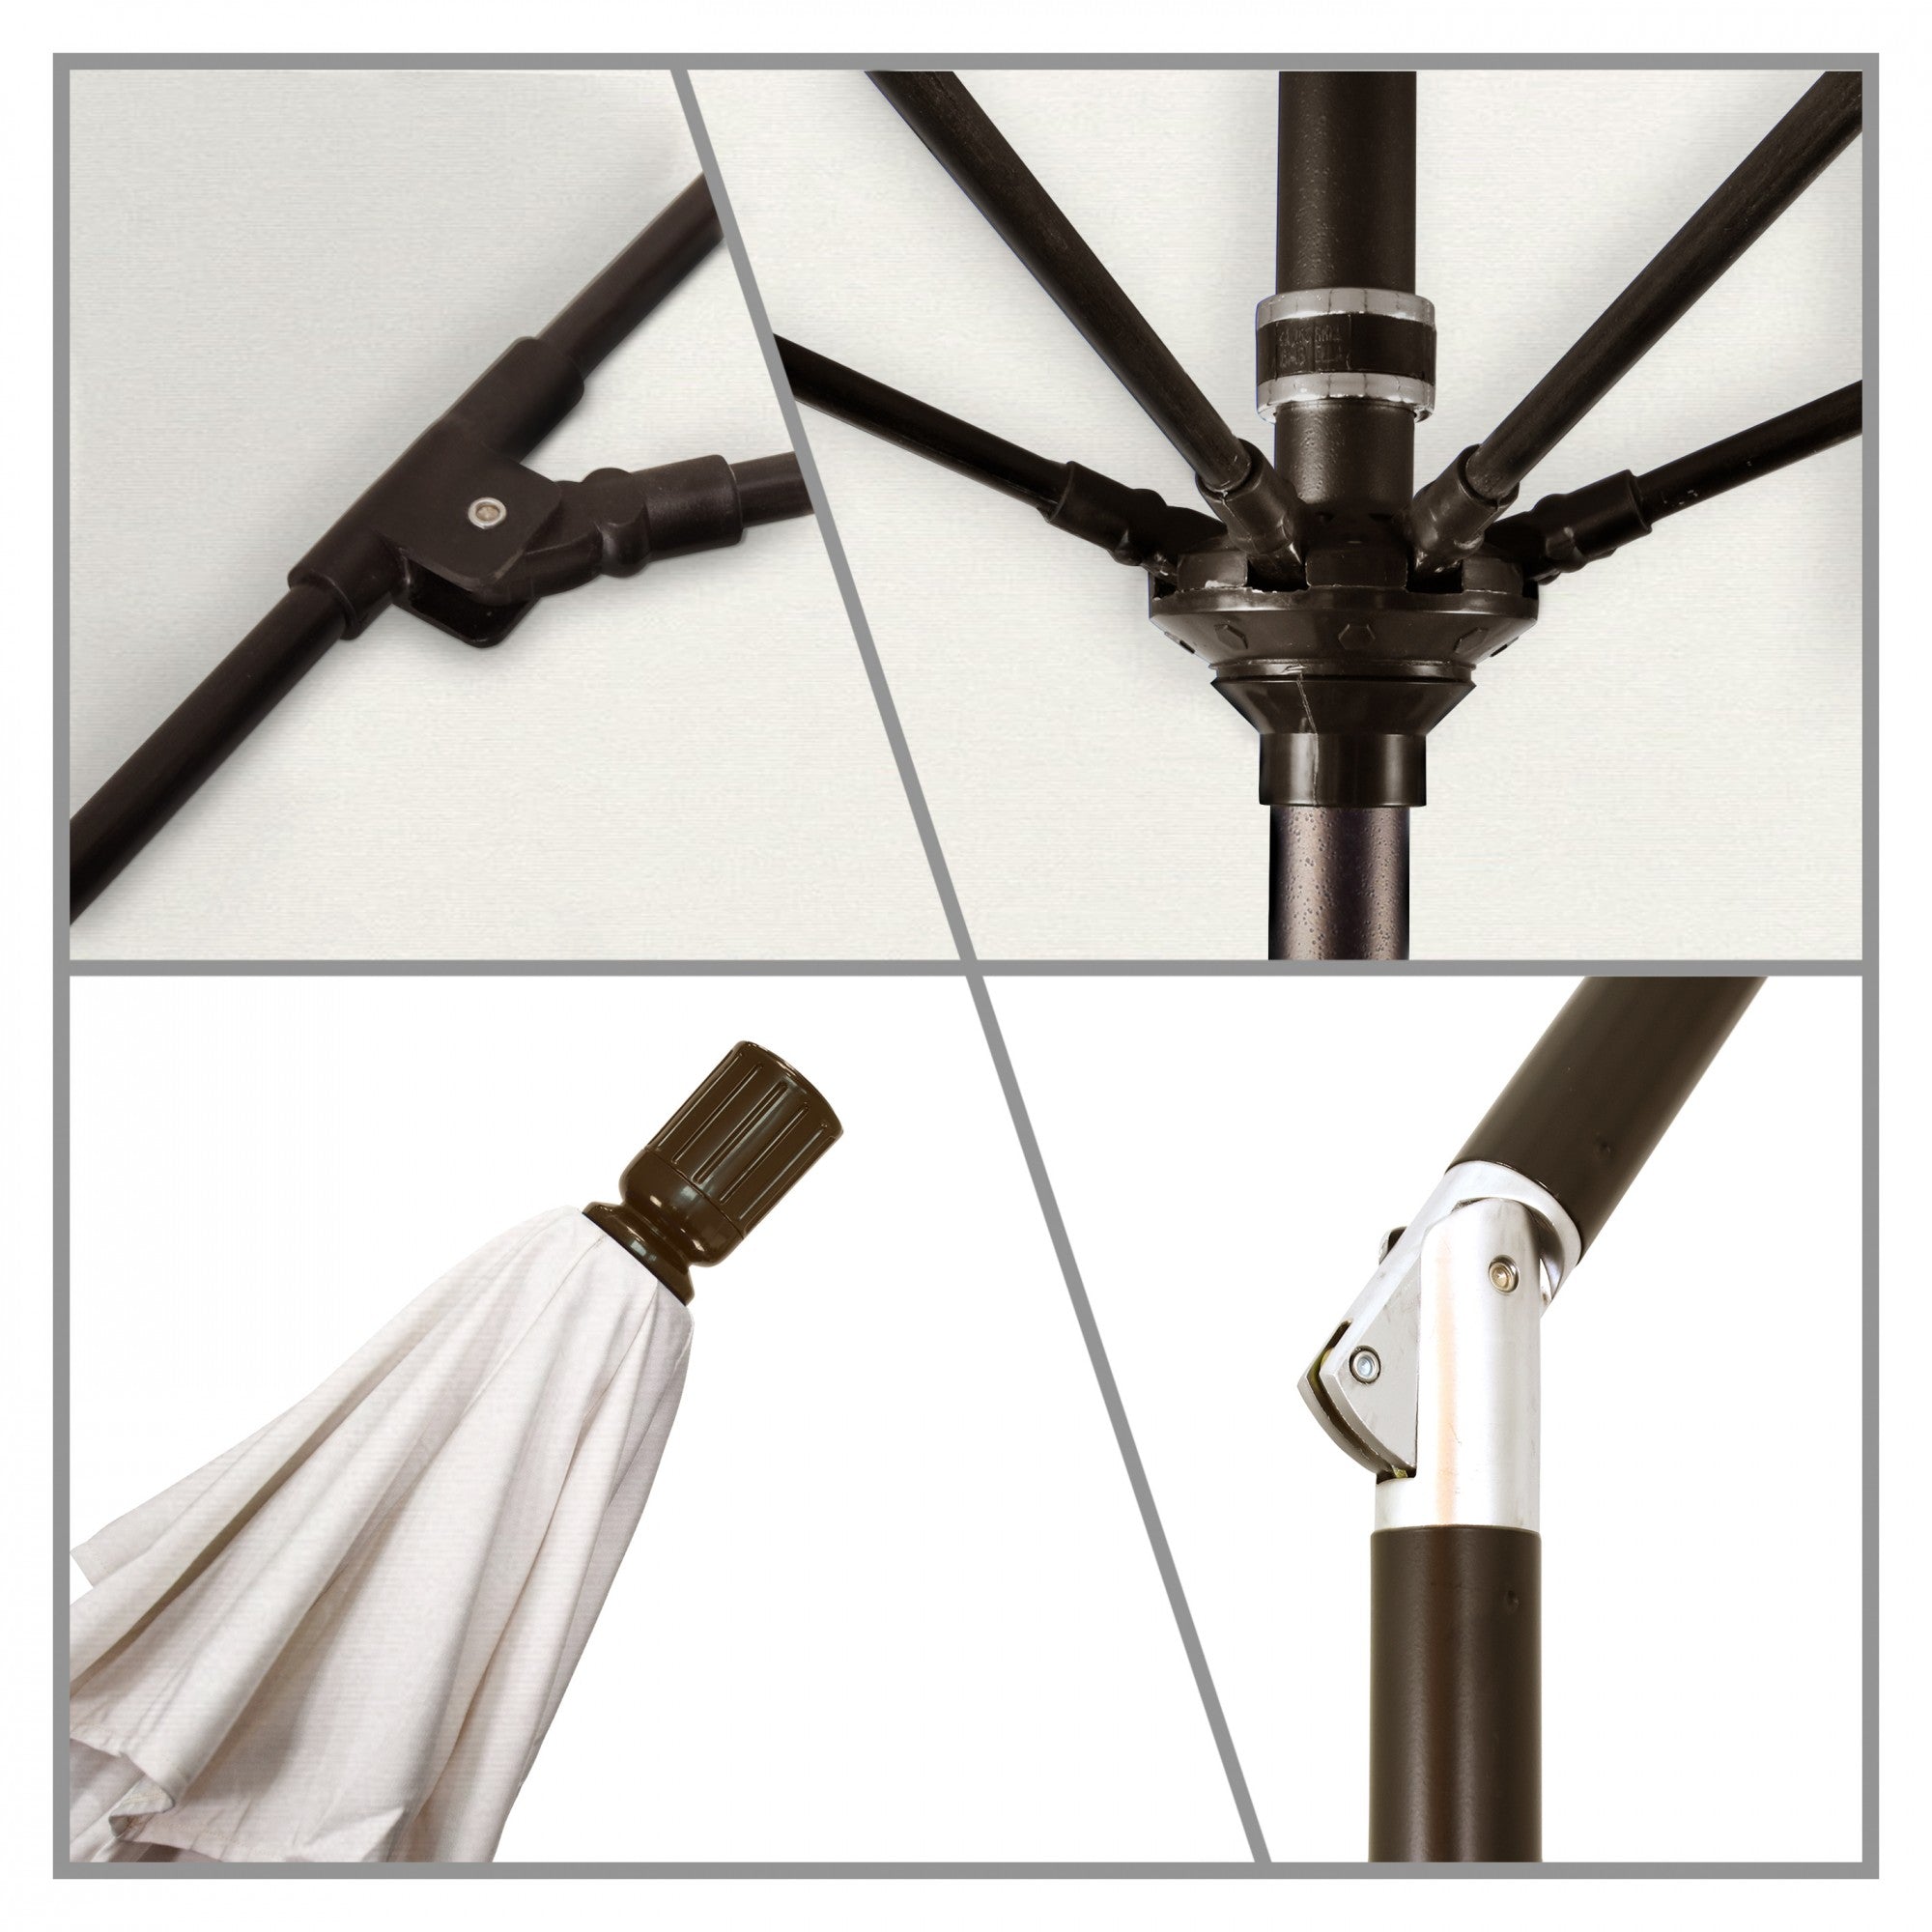 California Umbrella - 9' - Patio Umbrella Umbrella - Aluminum Pole - Natural - Pacifica - GSCUF908117-SA04